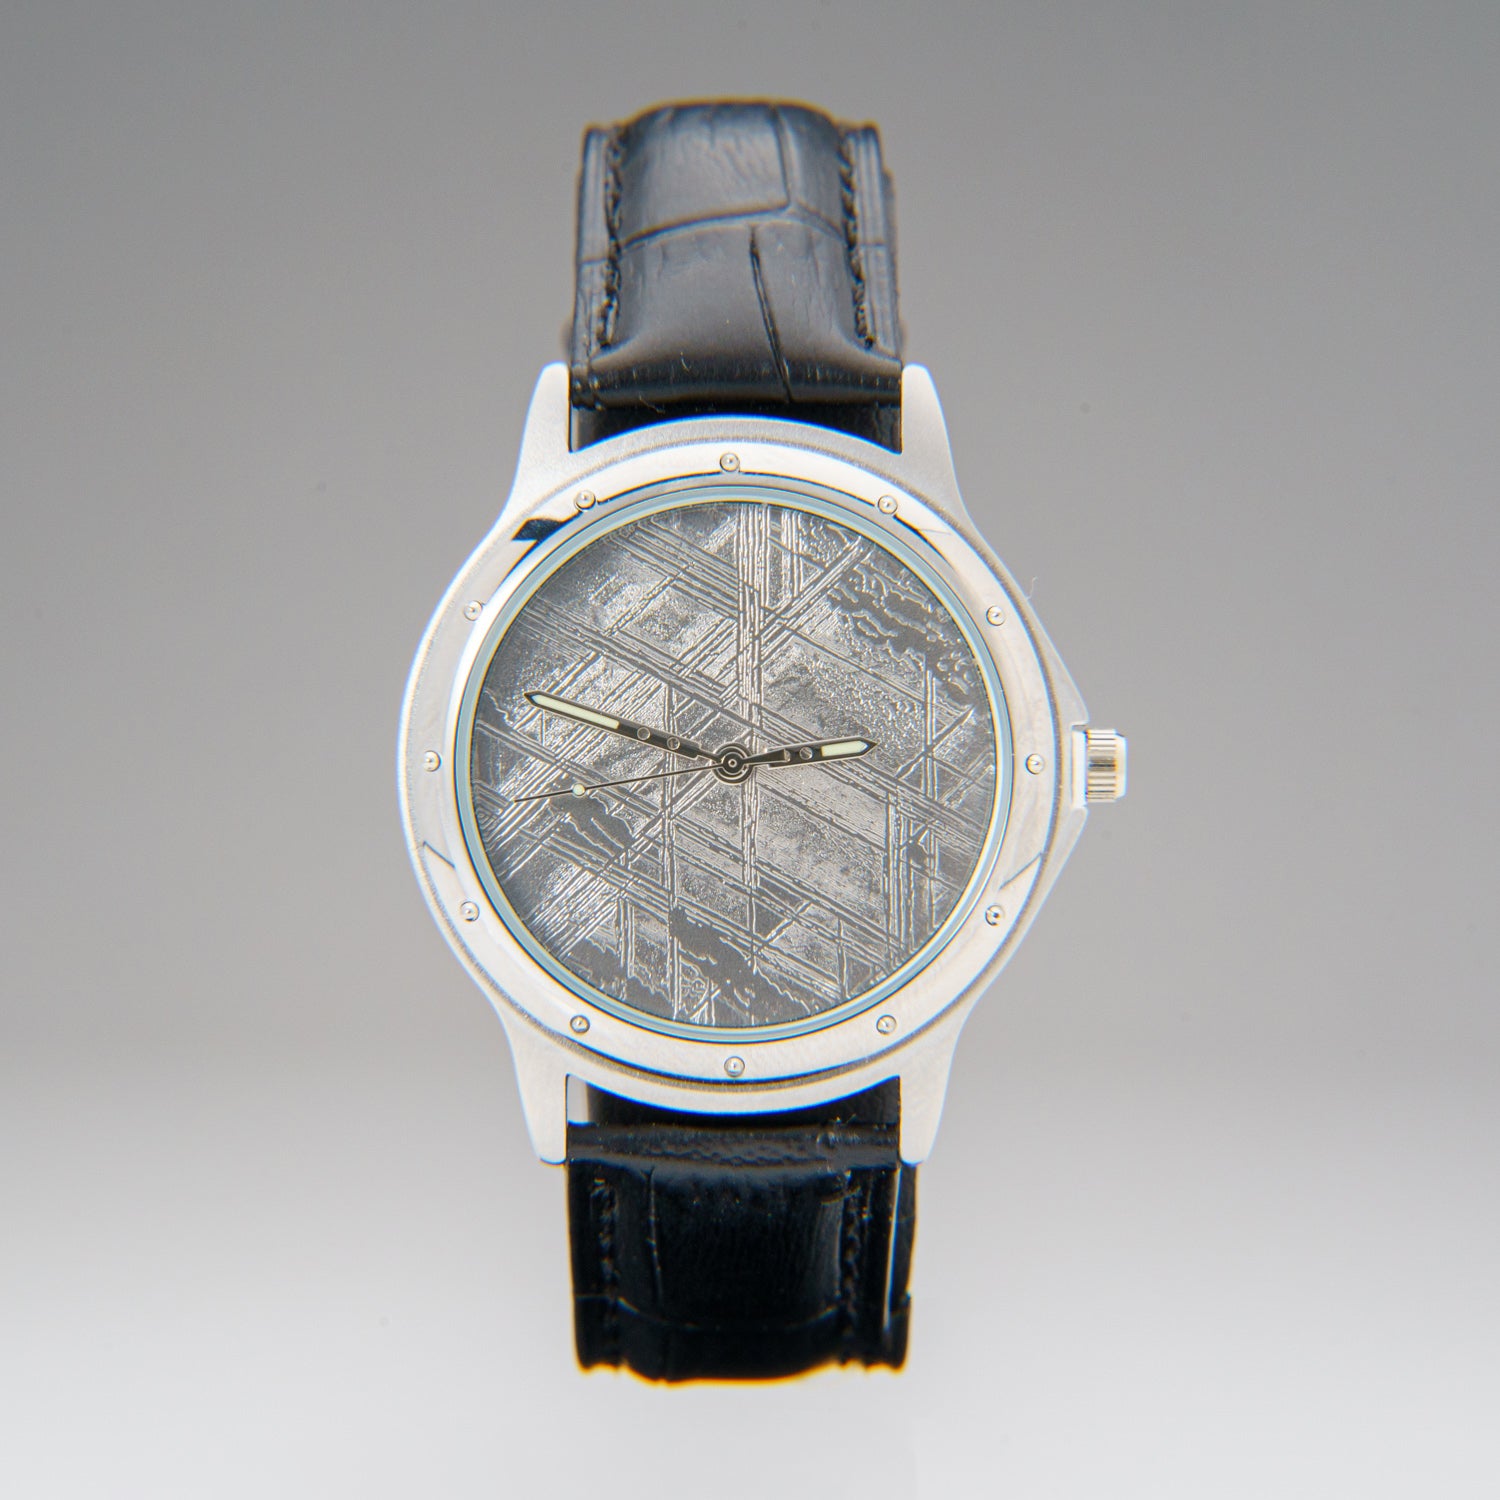 Genuine Muonionalusta Meteorite Watch with Genuine Leather Band